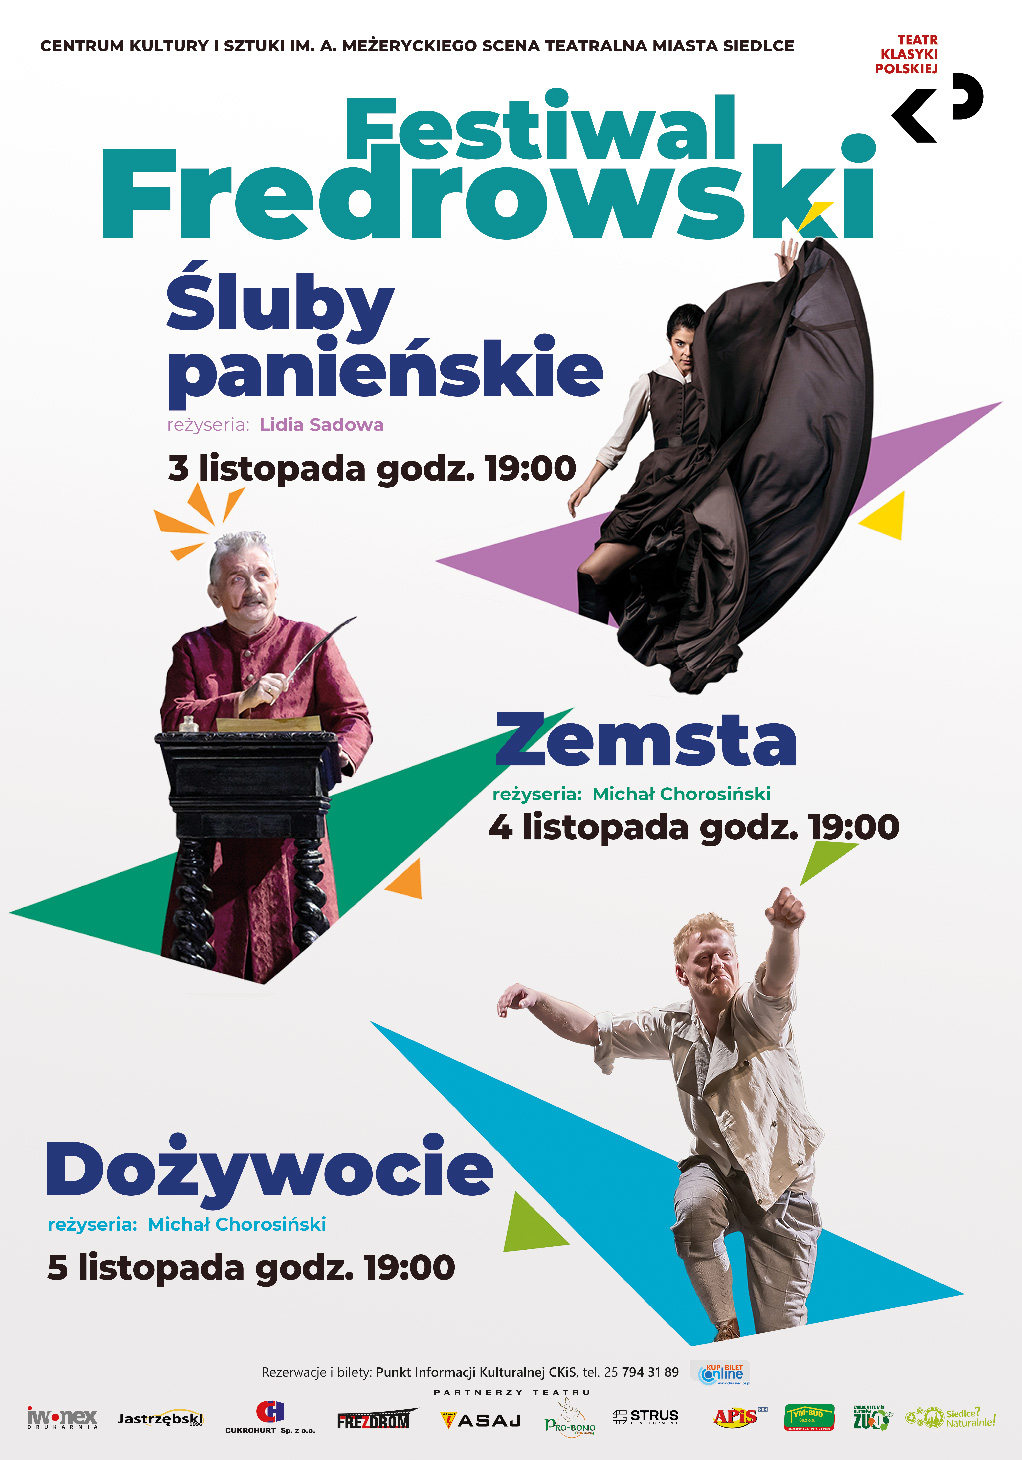 Festiwal Fredrowski od 3 listopada na Scenie Teatralnej Miasta Siedlce